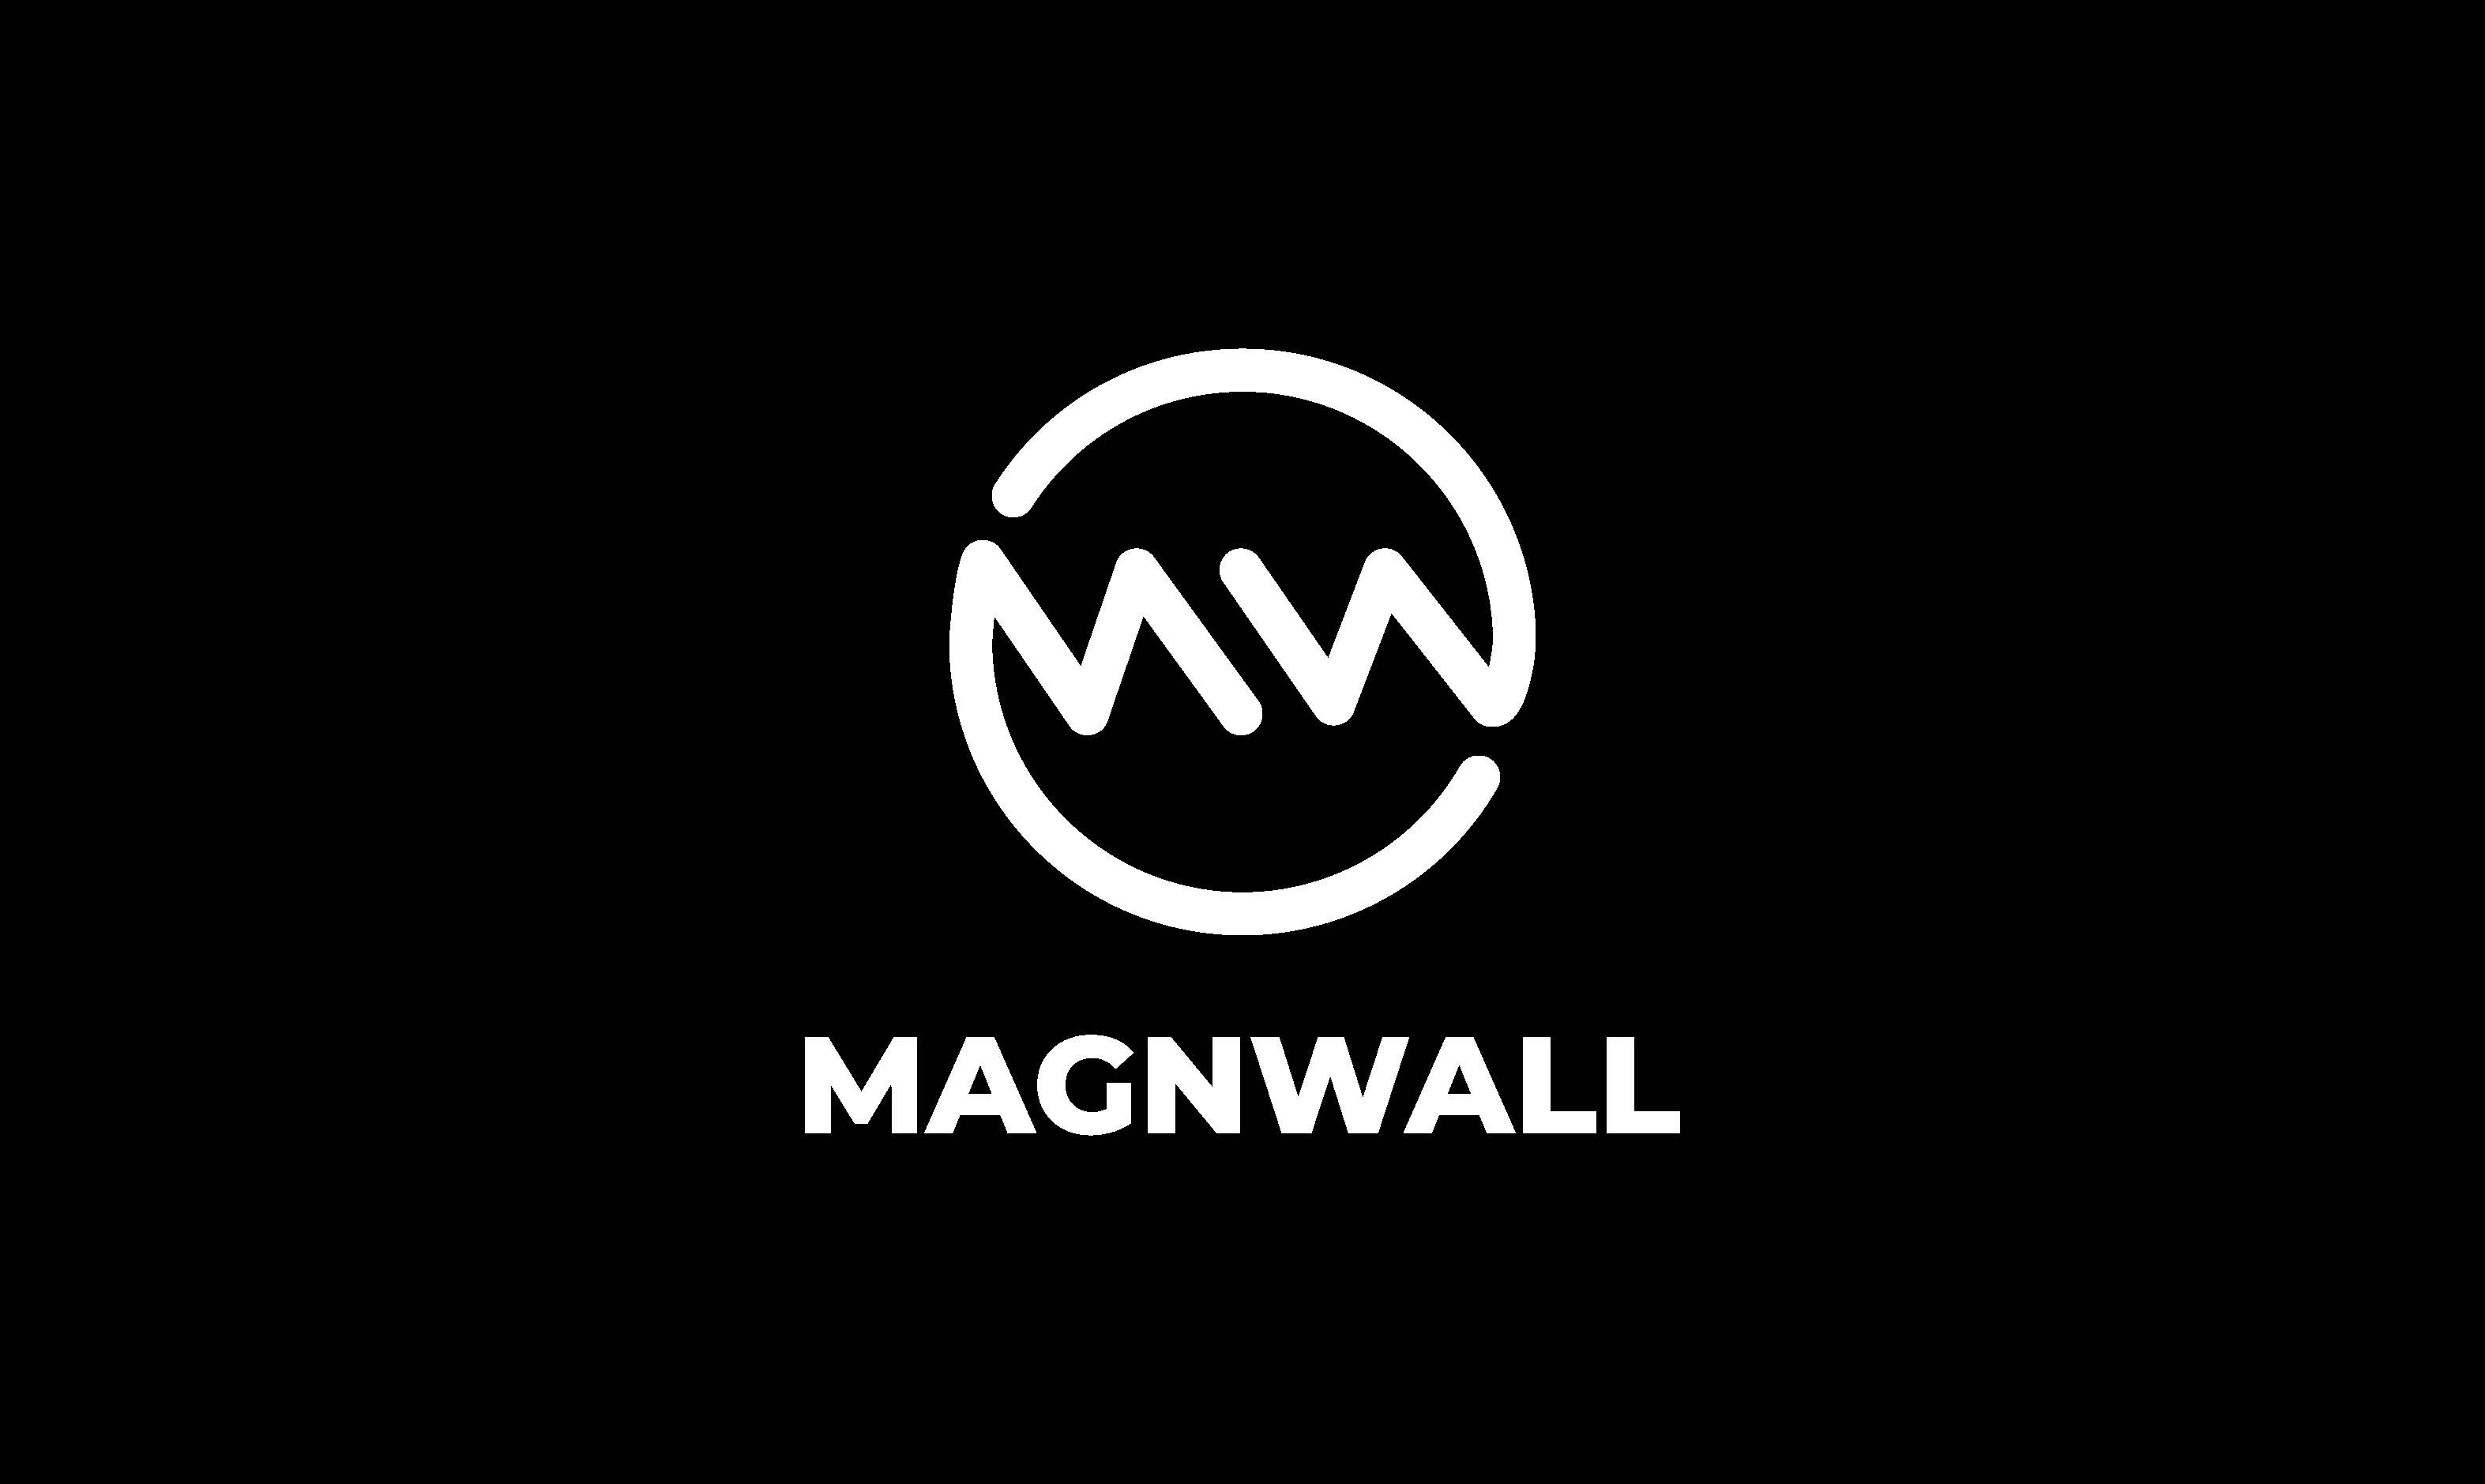 MAGNWALL